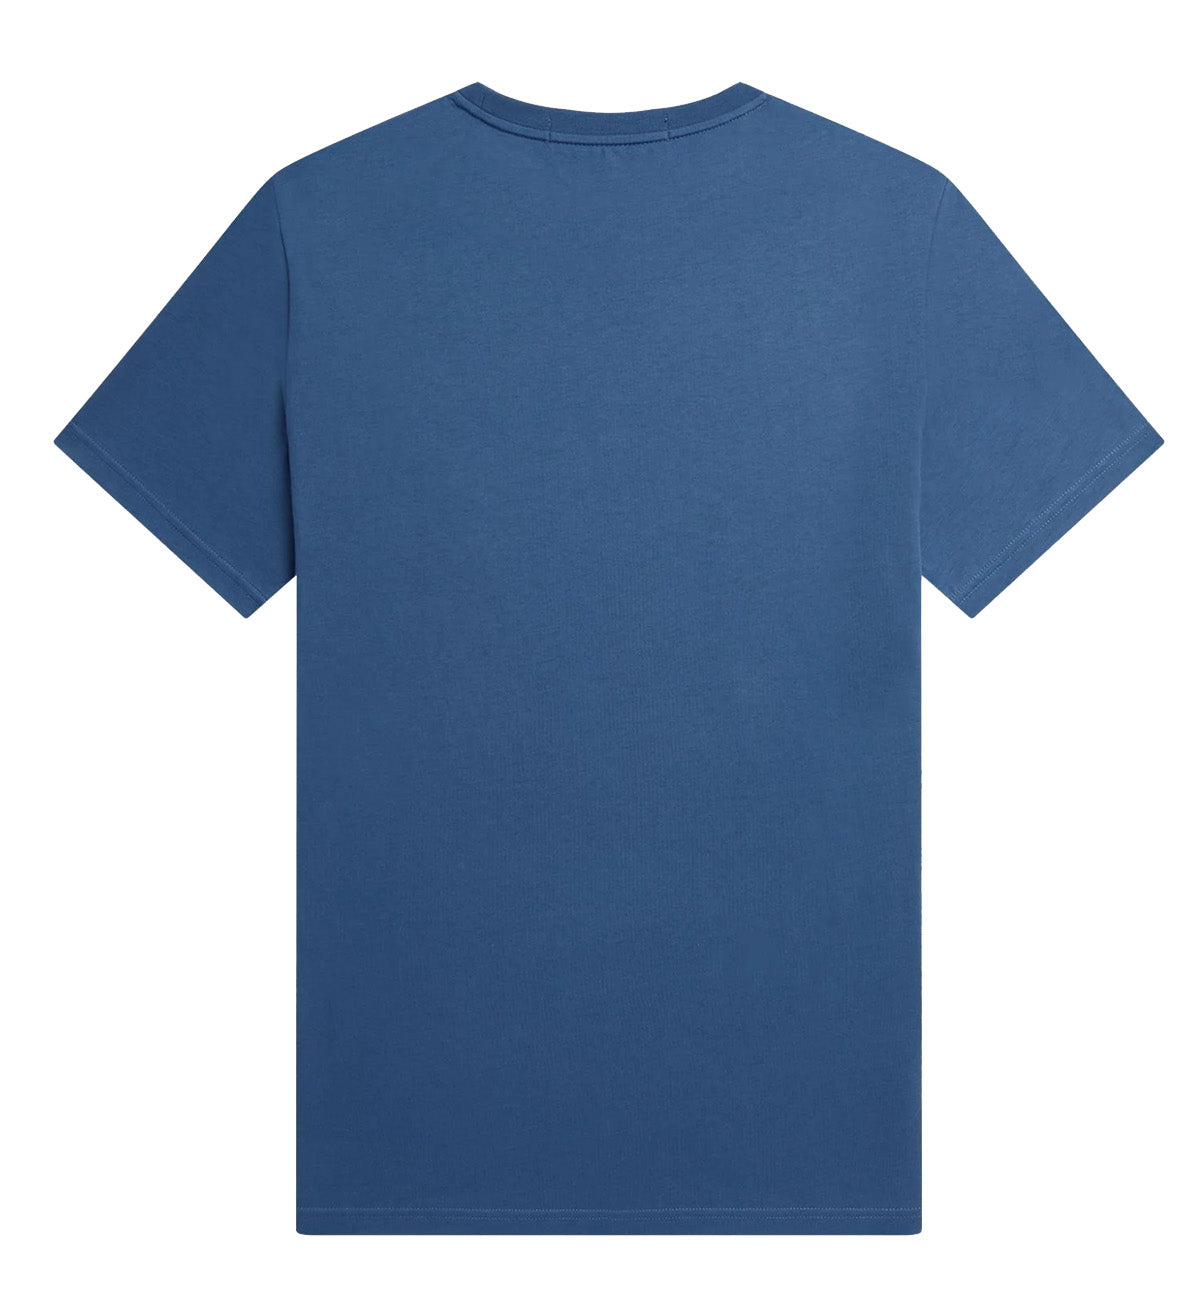 Fred Perry Dark Laurel Wreath Print T-Shirt (Blue)